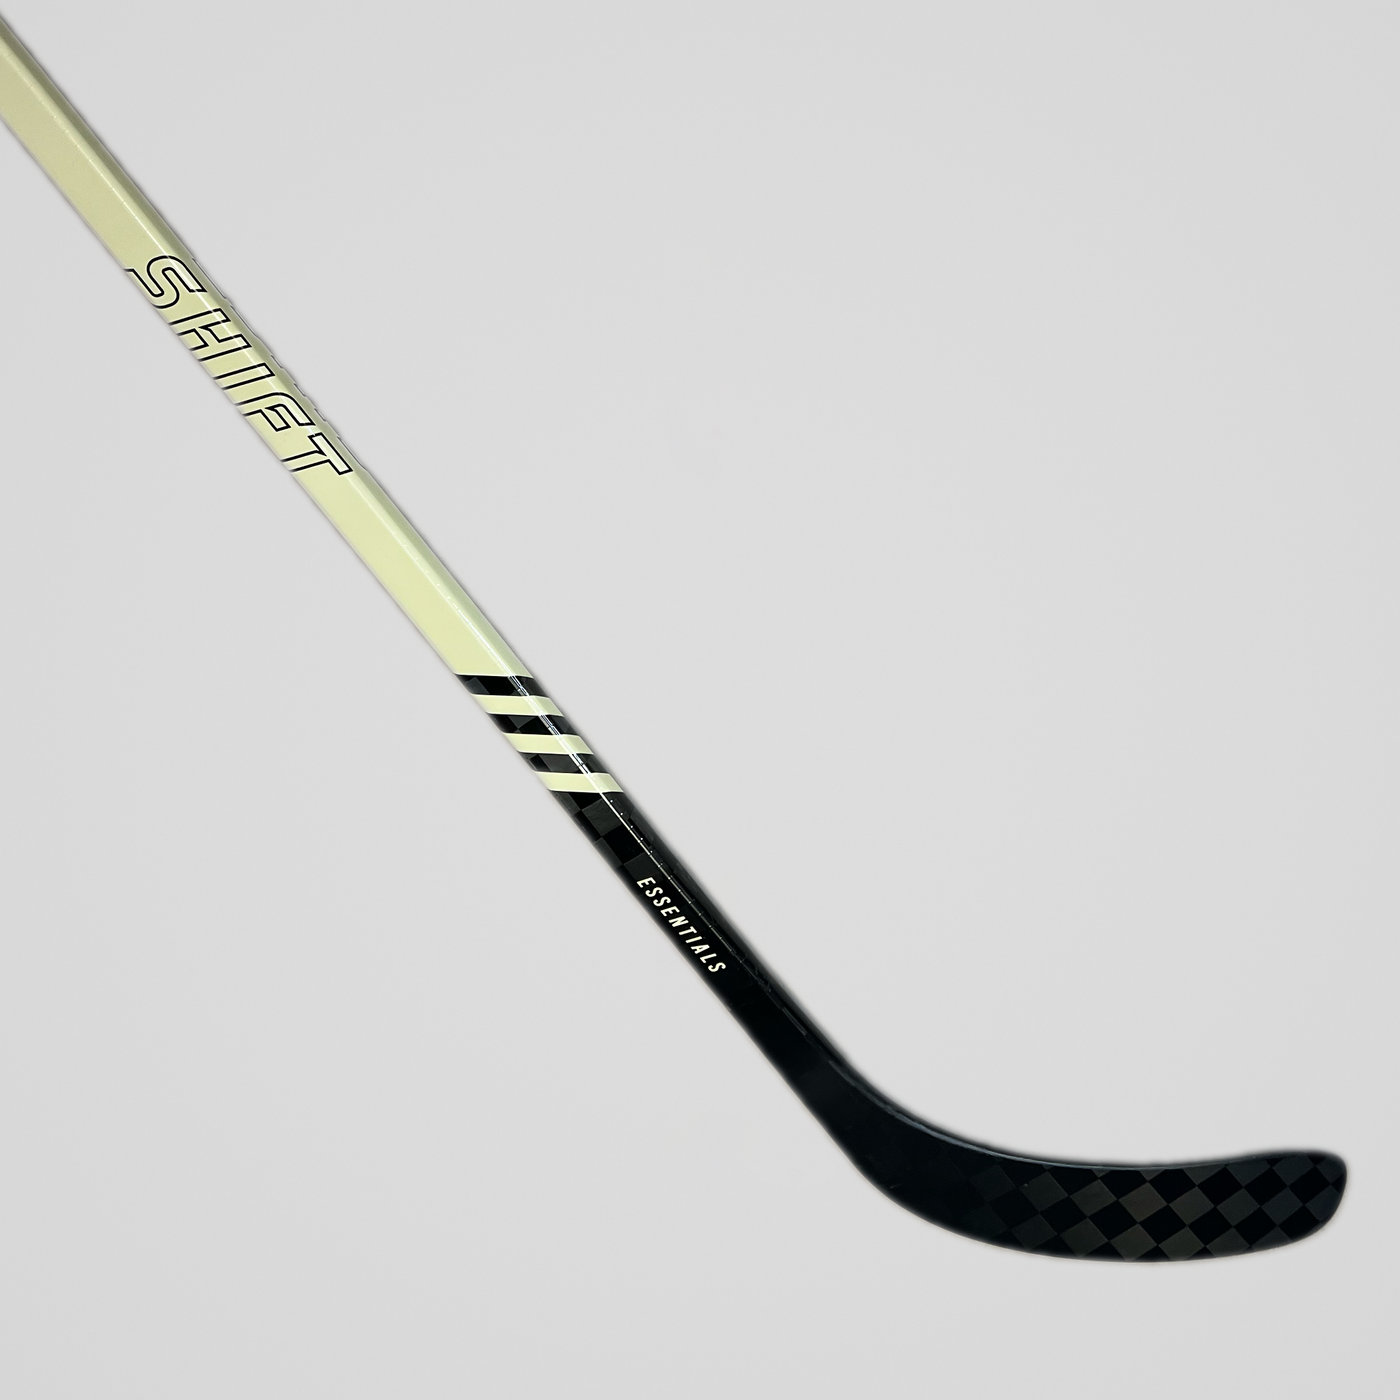 Essentials - Youth Hockey Stick - 48"